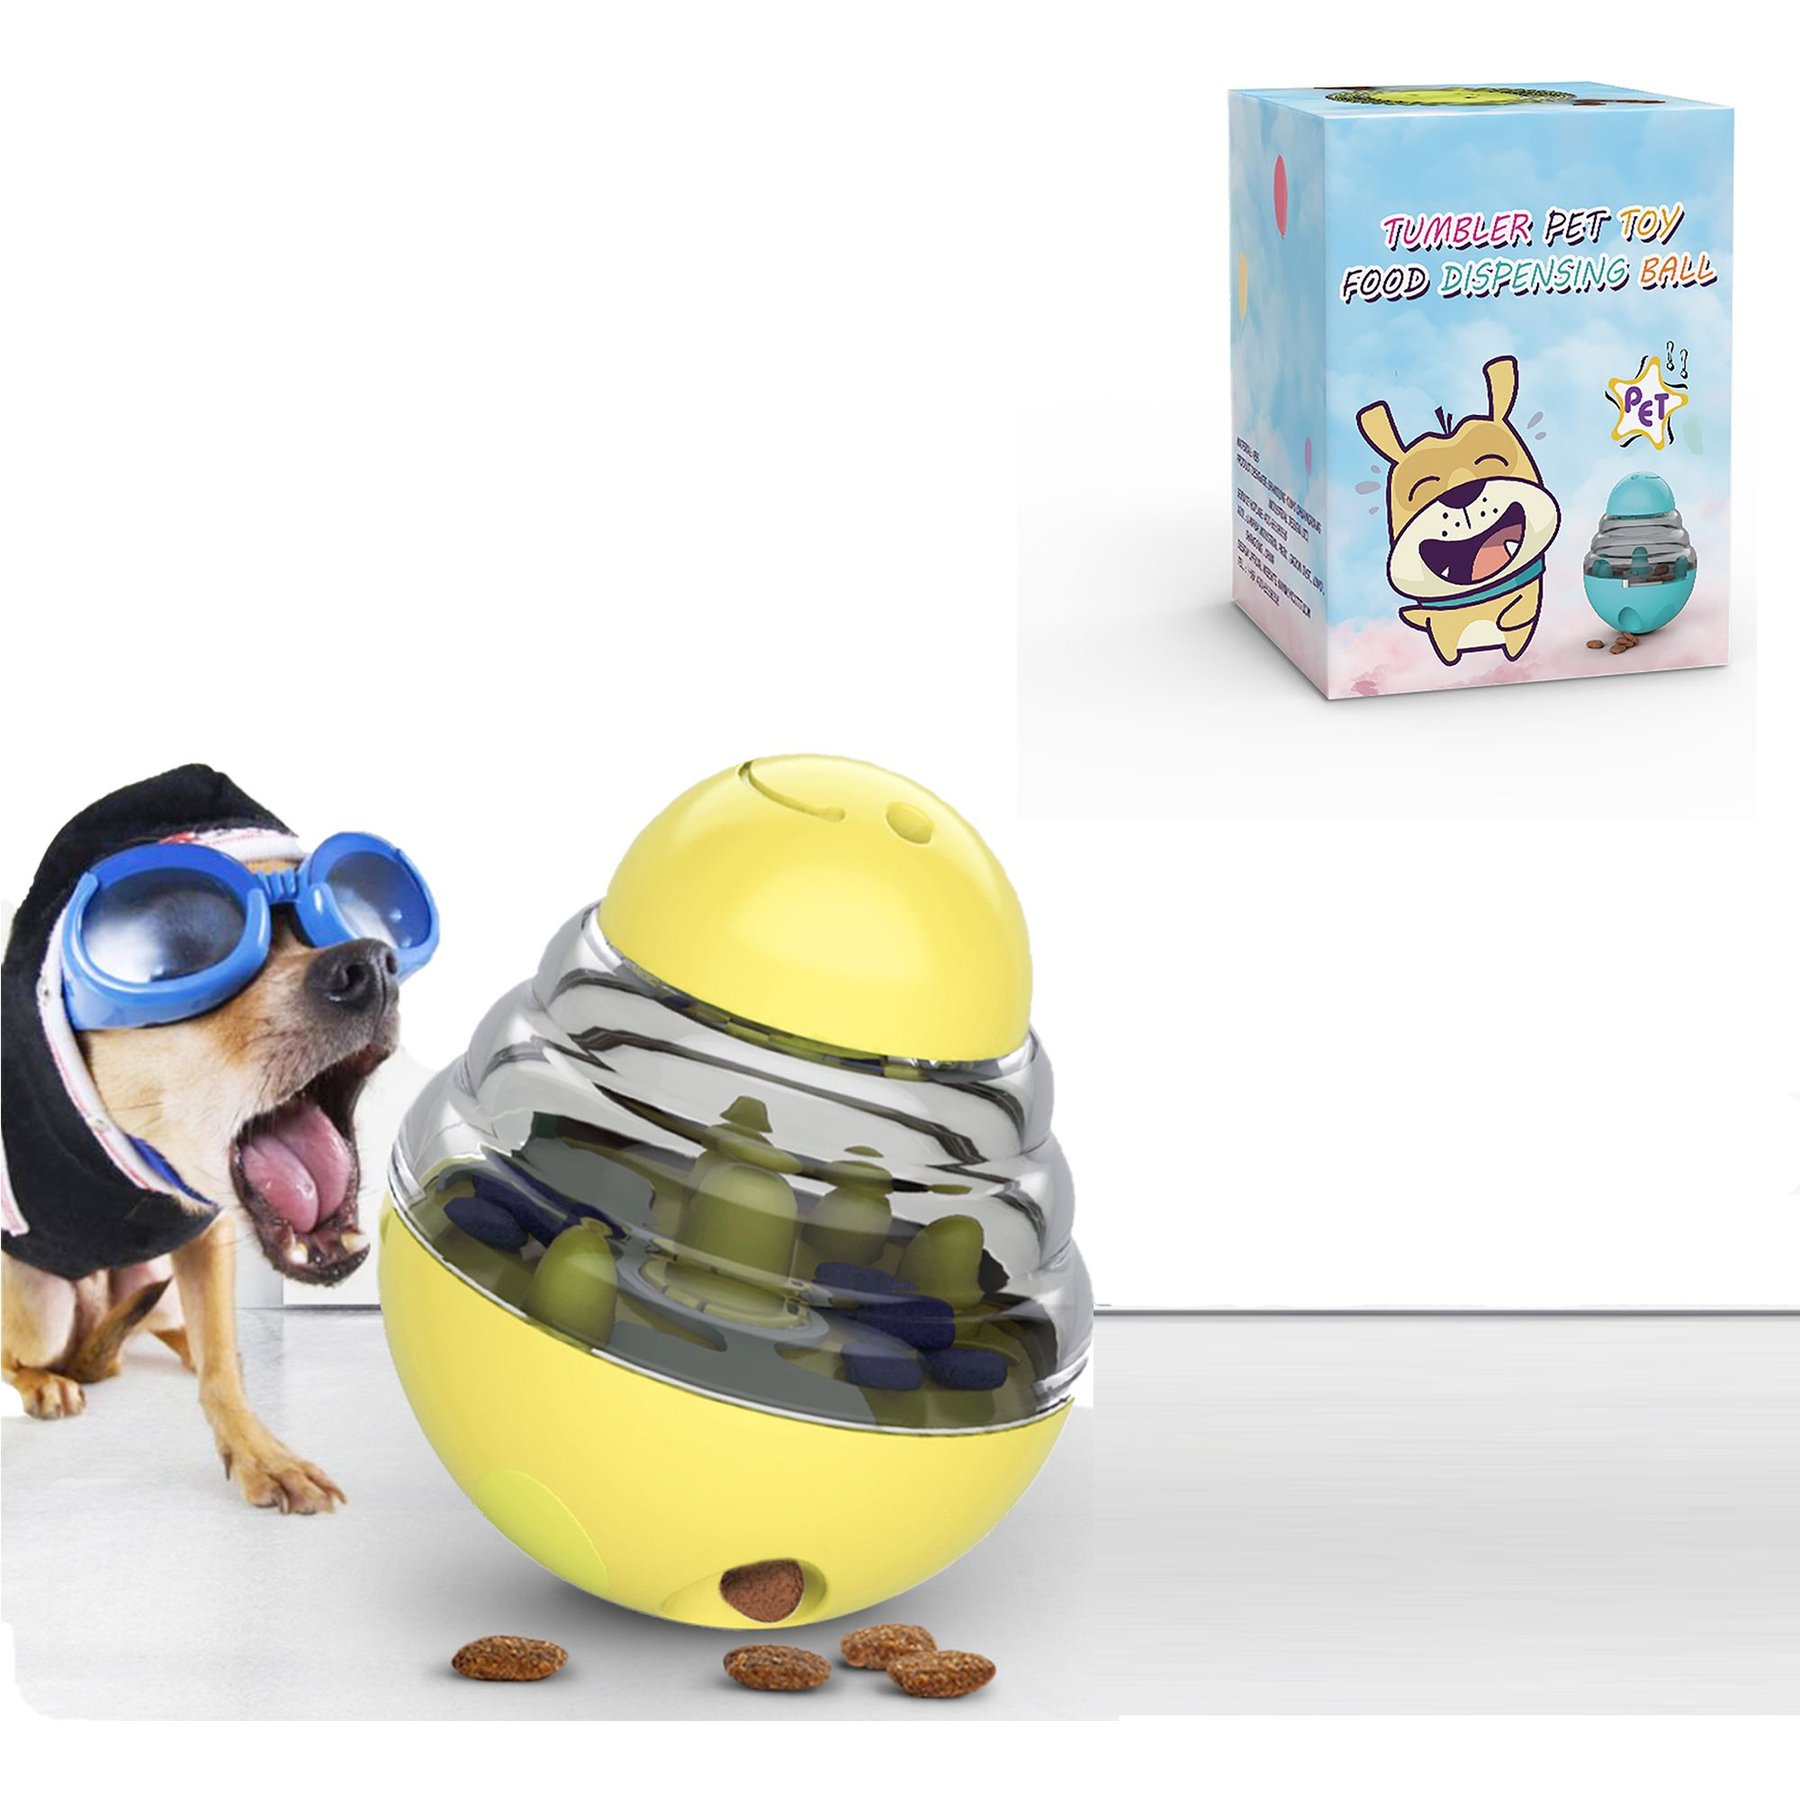 Starmark Bob-A-Lot Interactive Dog Pet Toy, Large, Yellow/Green